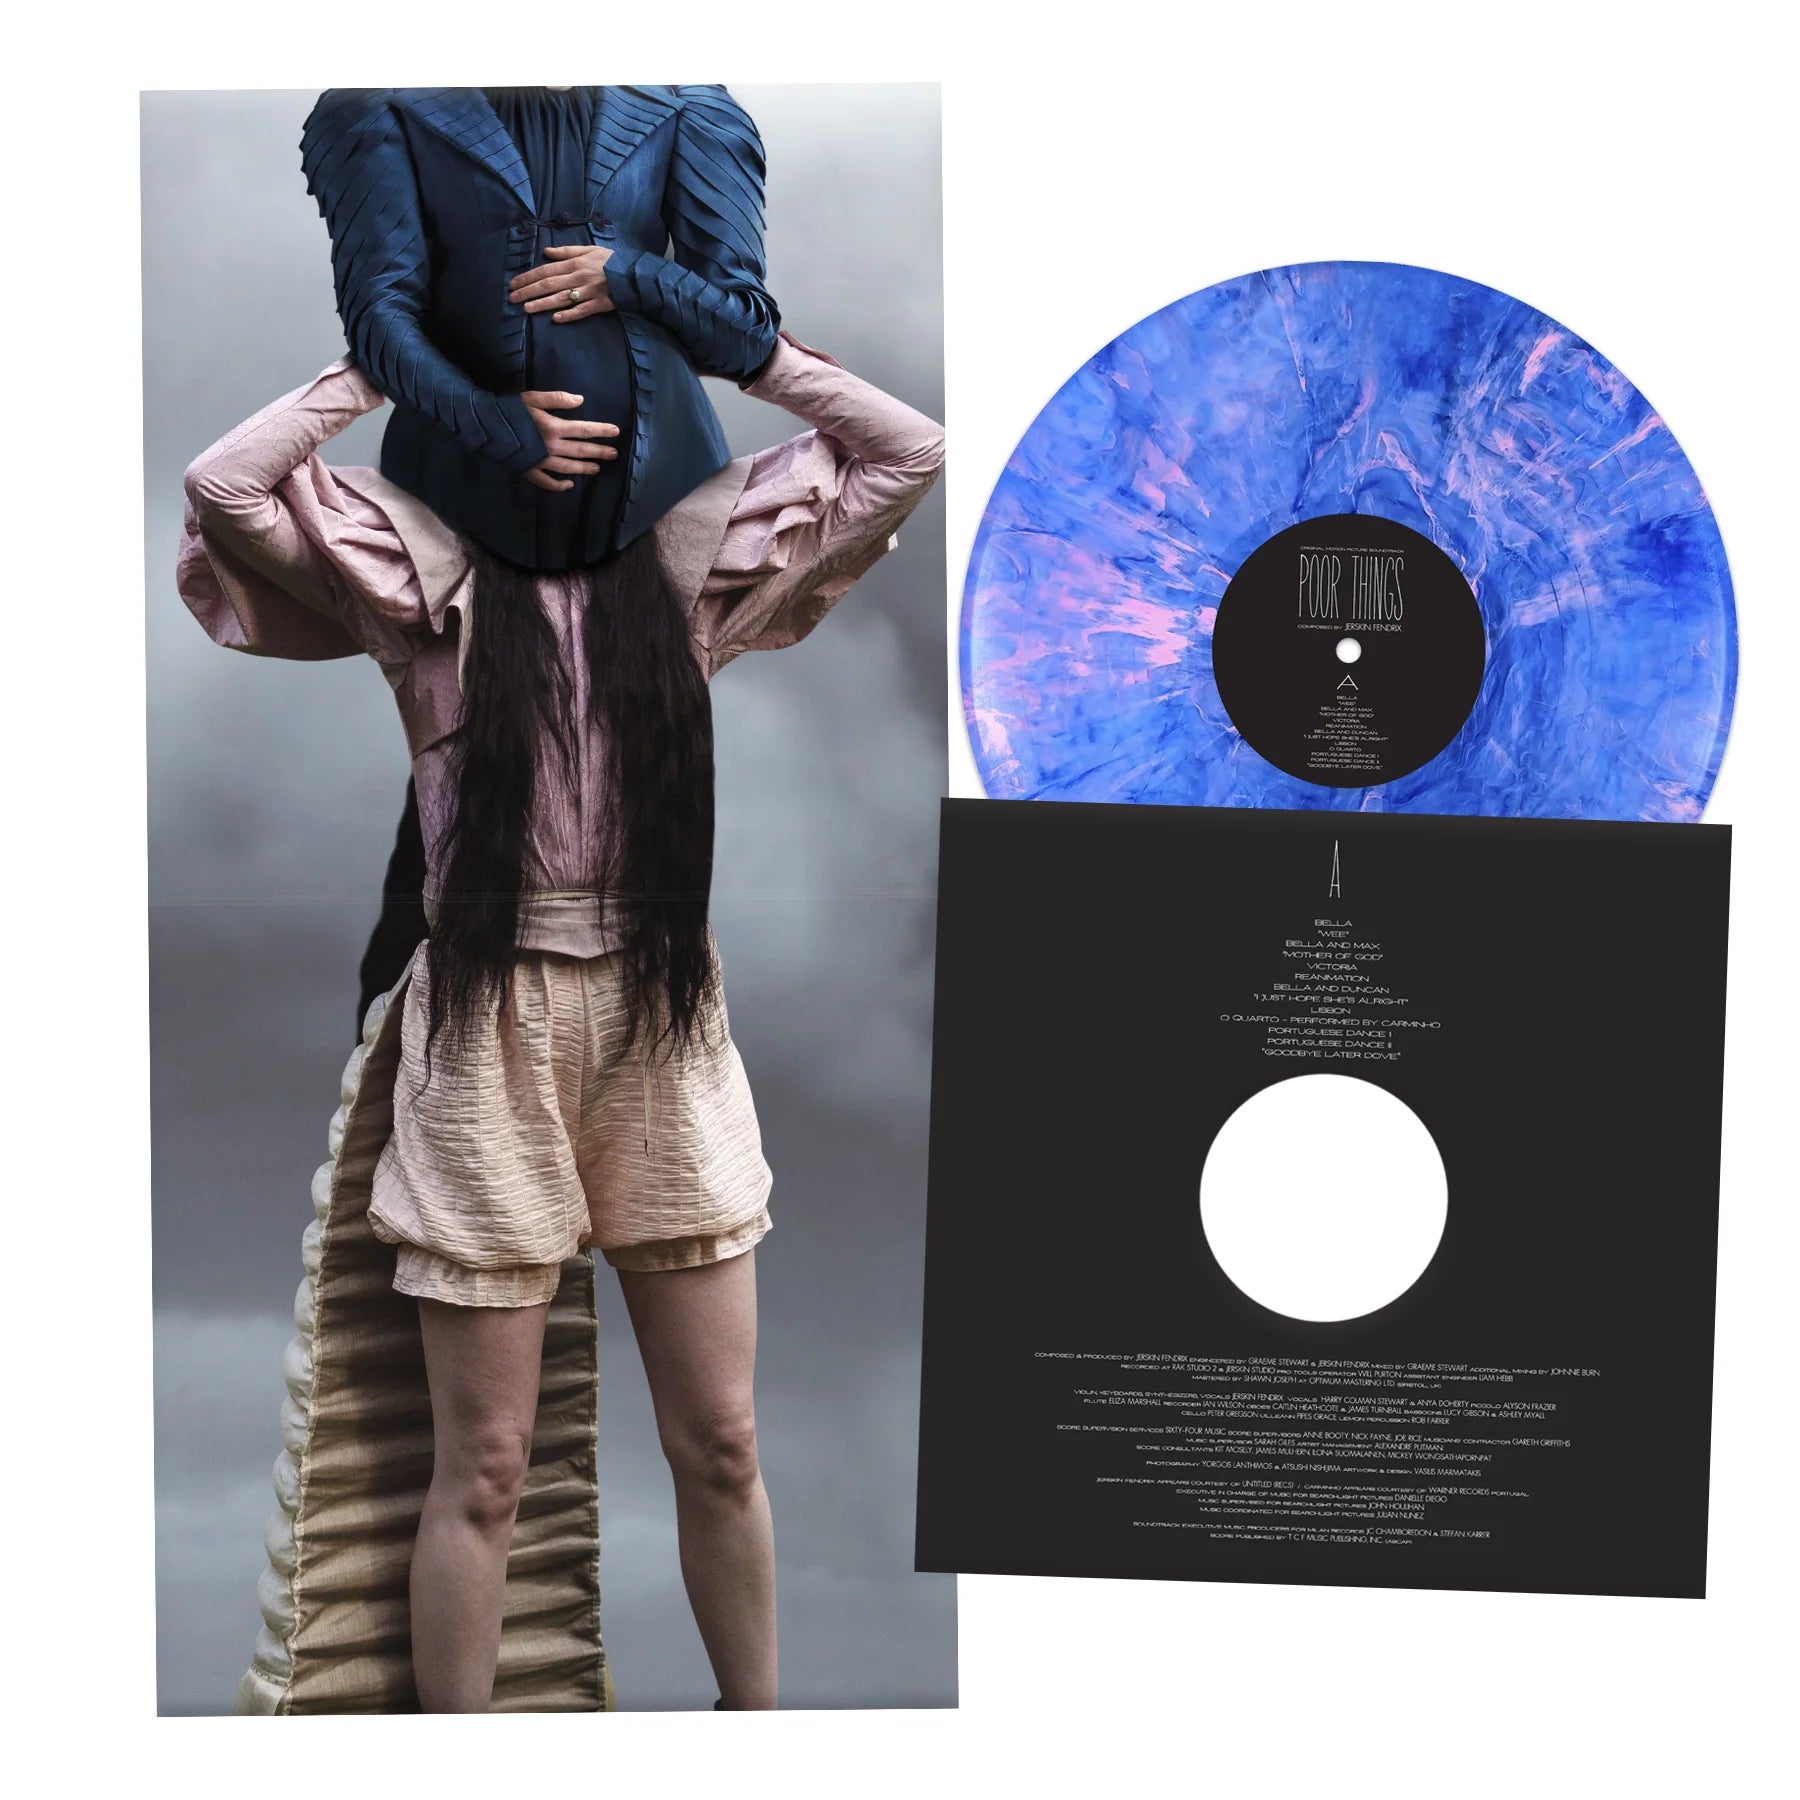 Jerskin Fendrix - Poor Things (OST): Limited Blue & Pink Vinyl LP